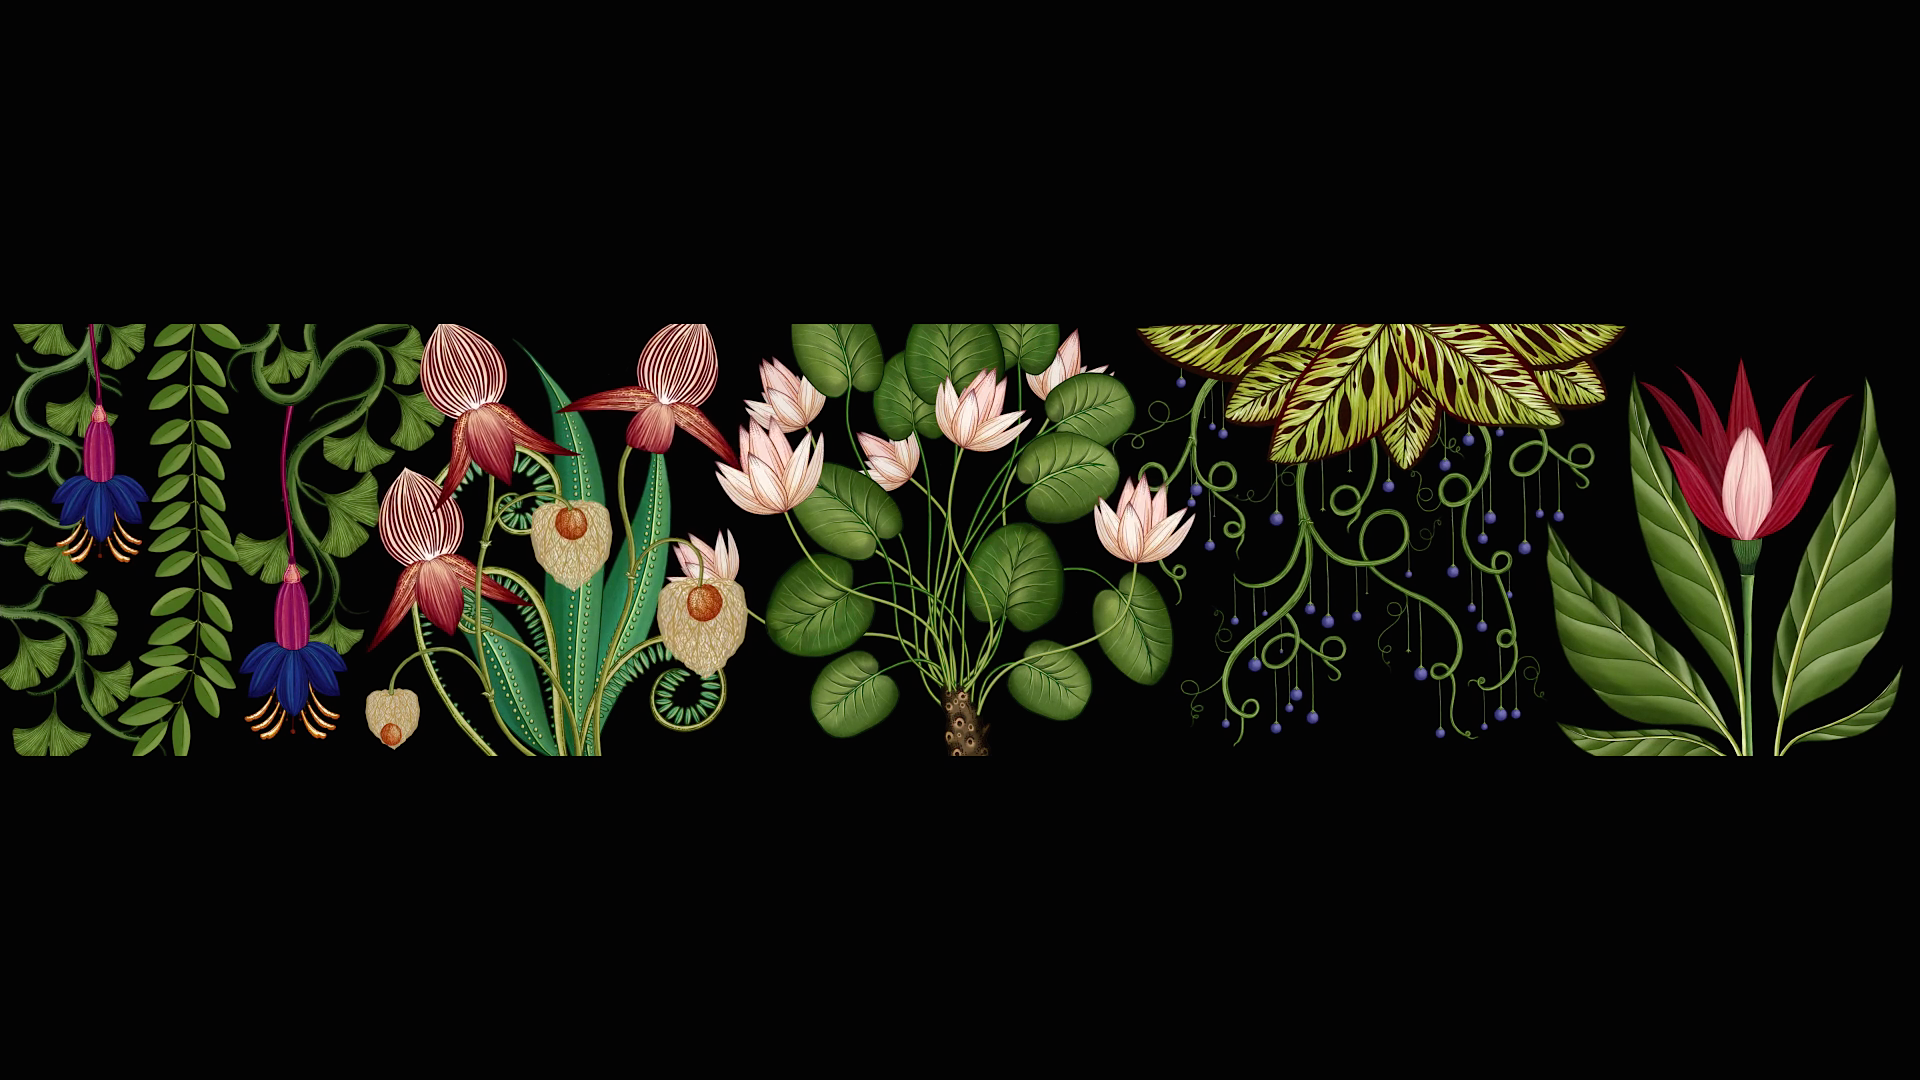 Subtle Sense The Animated Wallpaper Installation Publicis Botanical